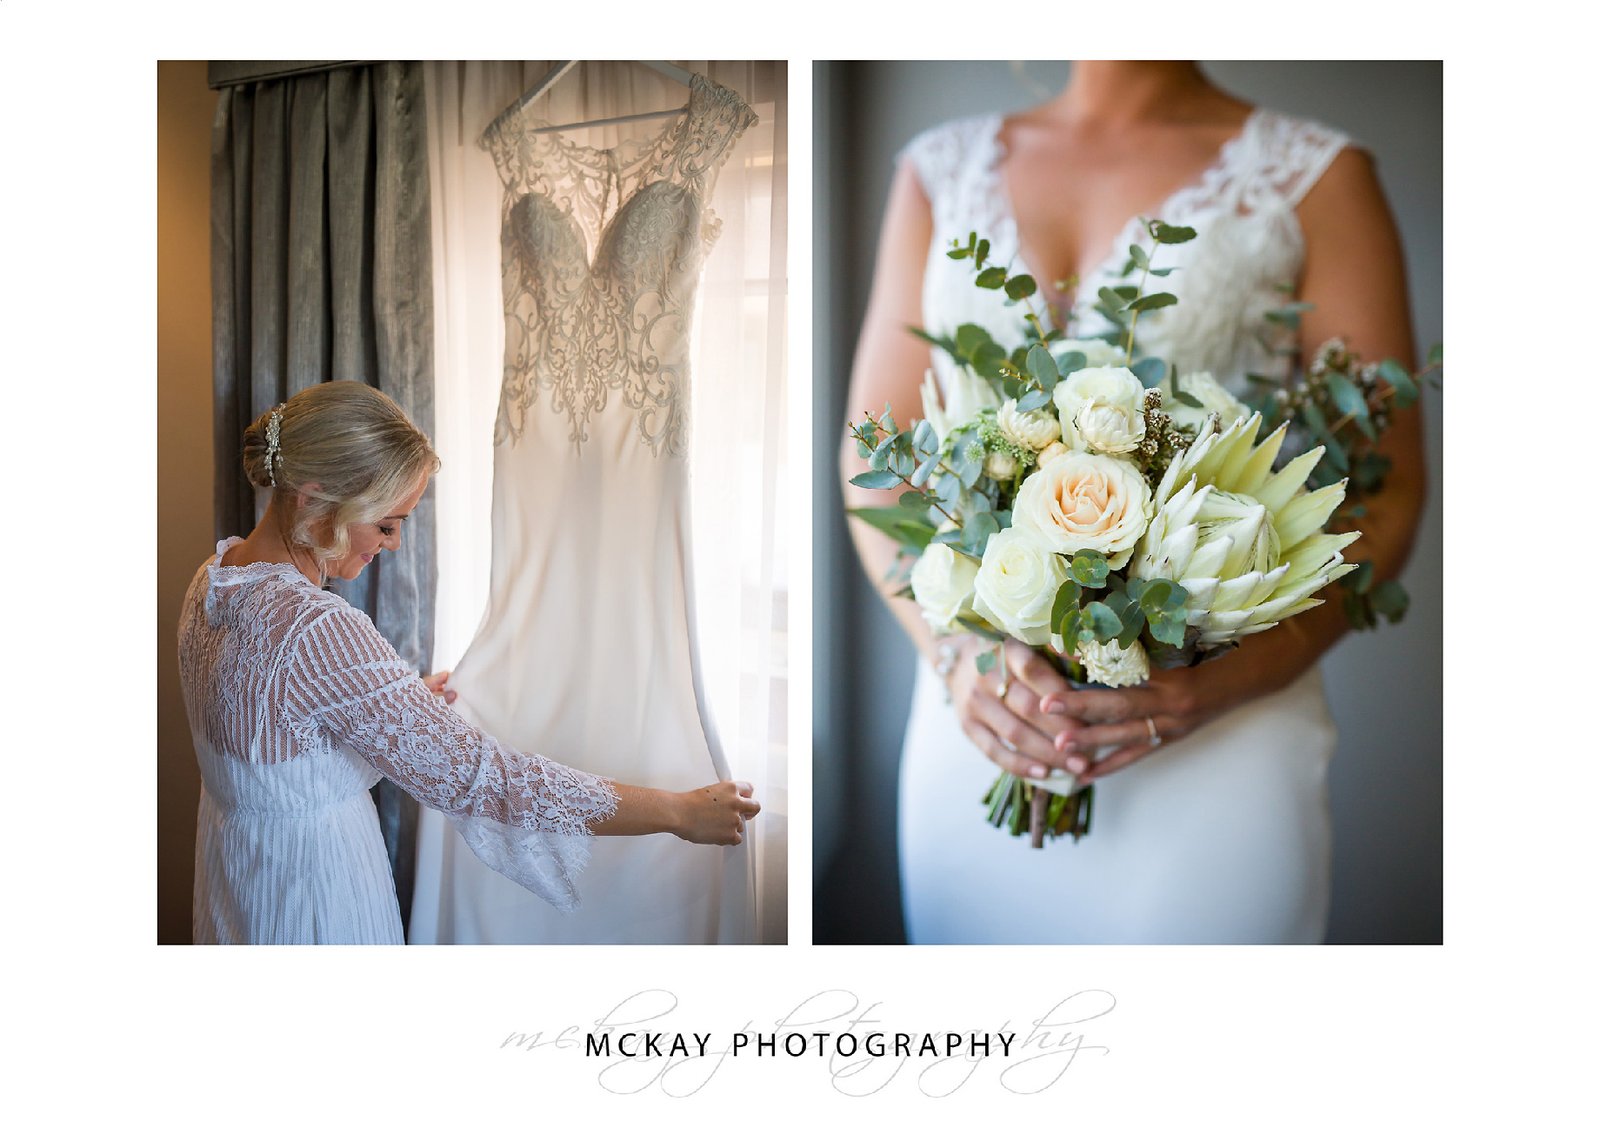 Dress and flower details wedding